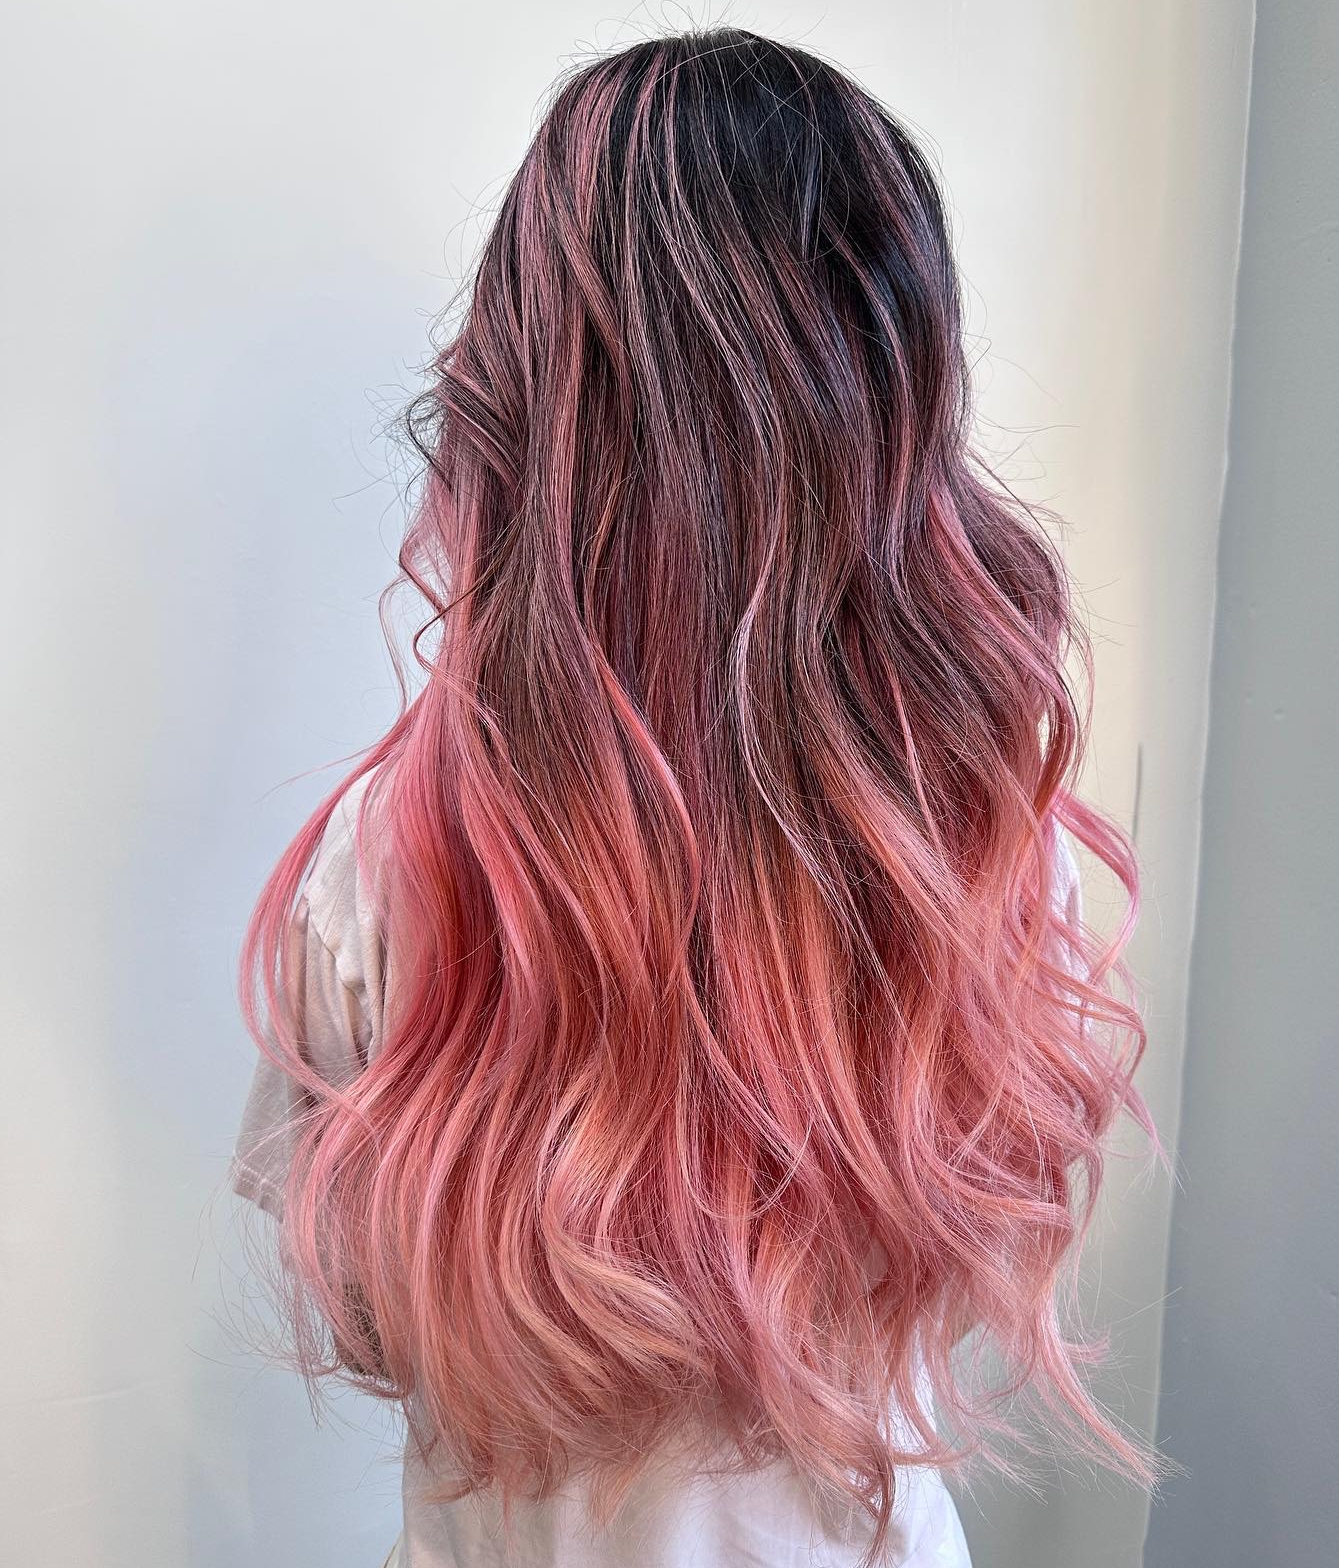 Peachy Pink Highlights on Long Dark Hair